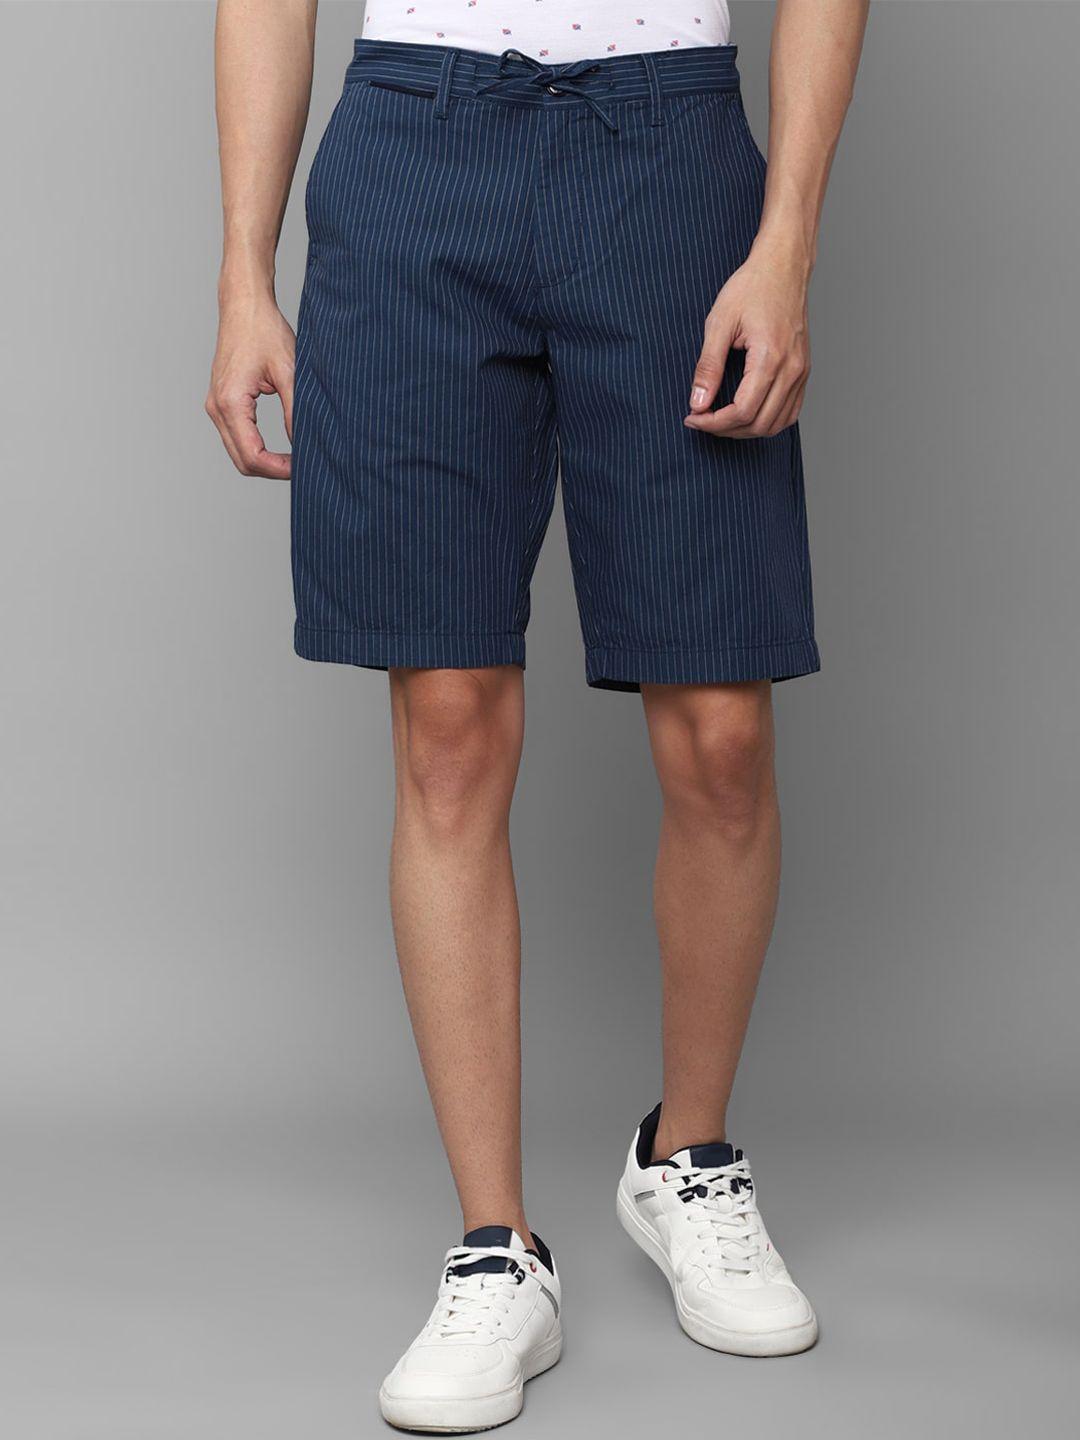 allen-solly-men-navy-blue-striped-printed-slim-fit-shorts